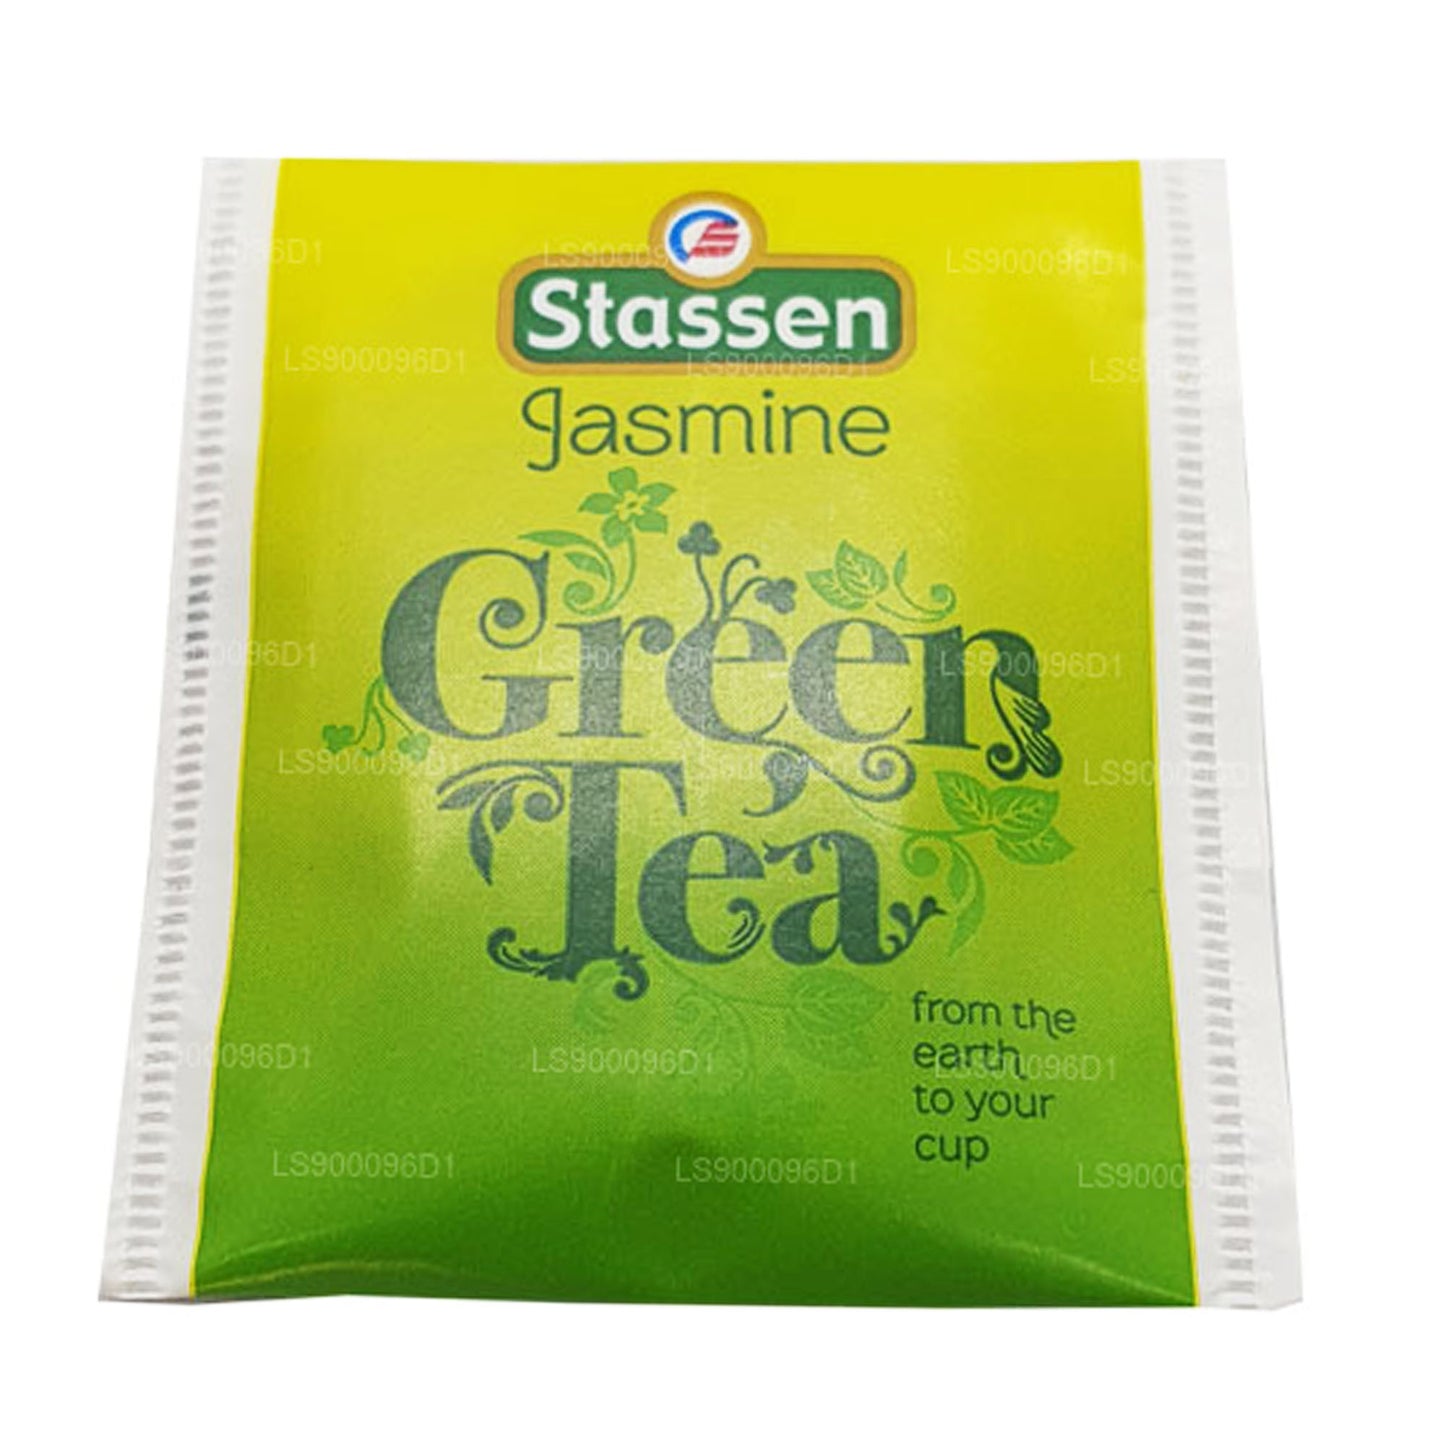 Stassen 茉莉花绿茶 (150g) 100 个茶包